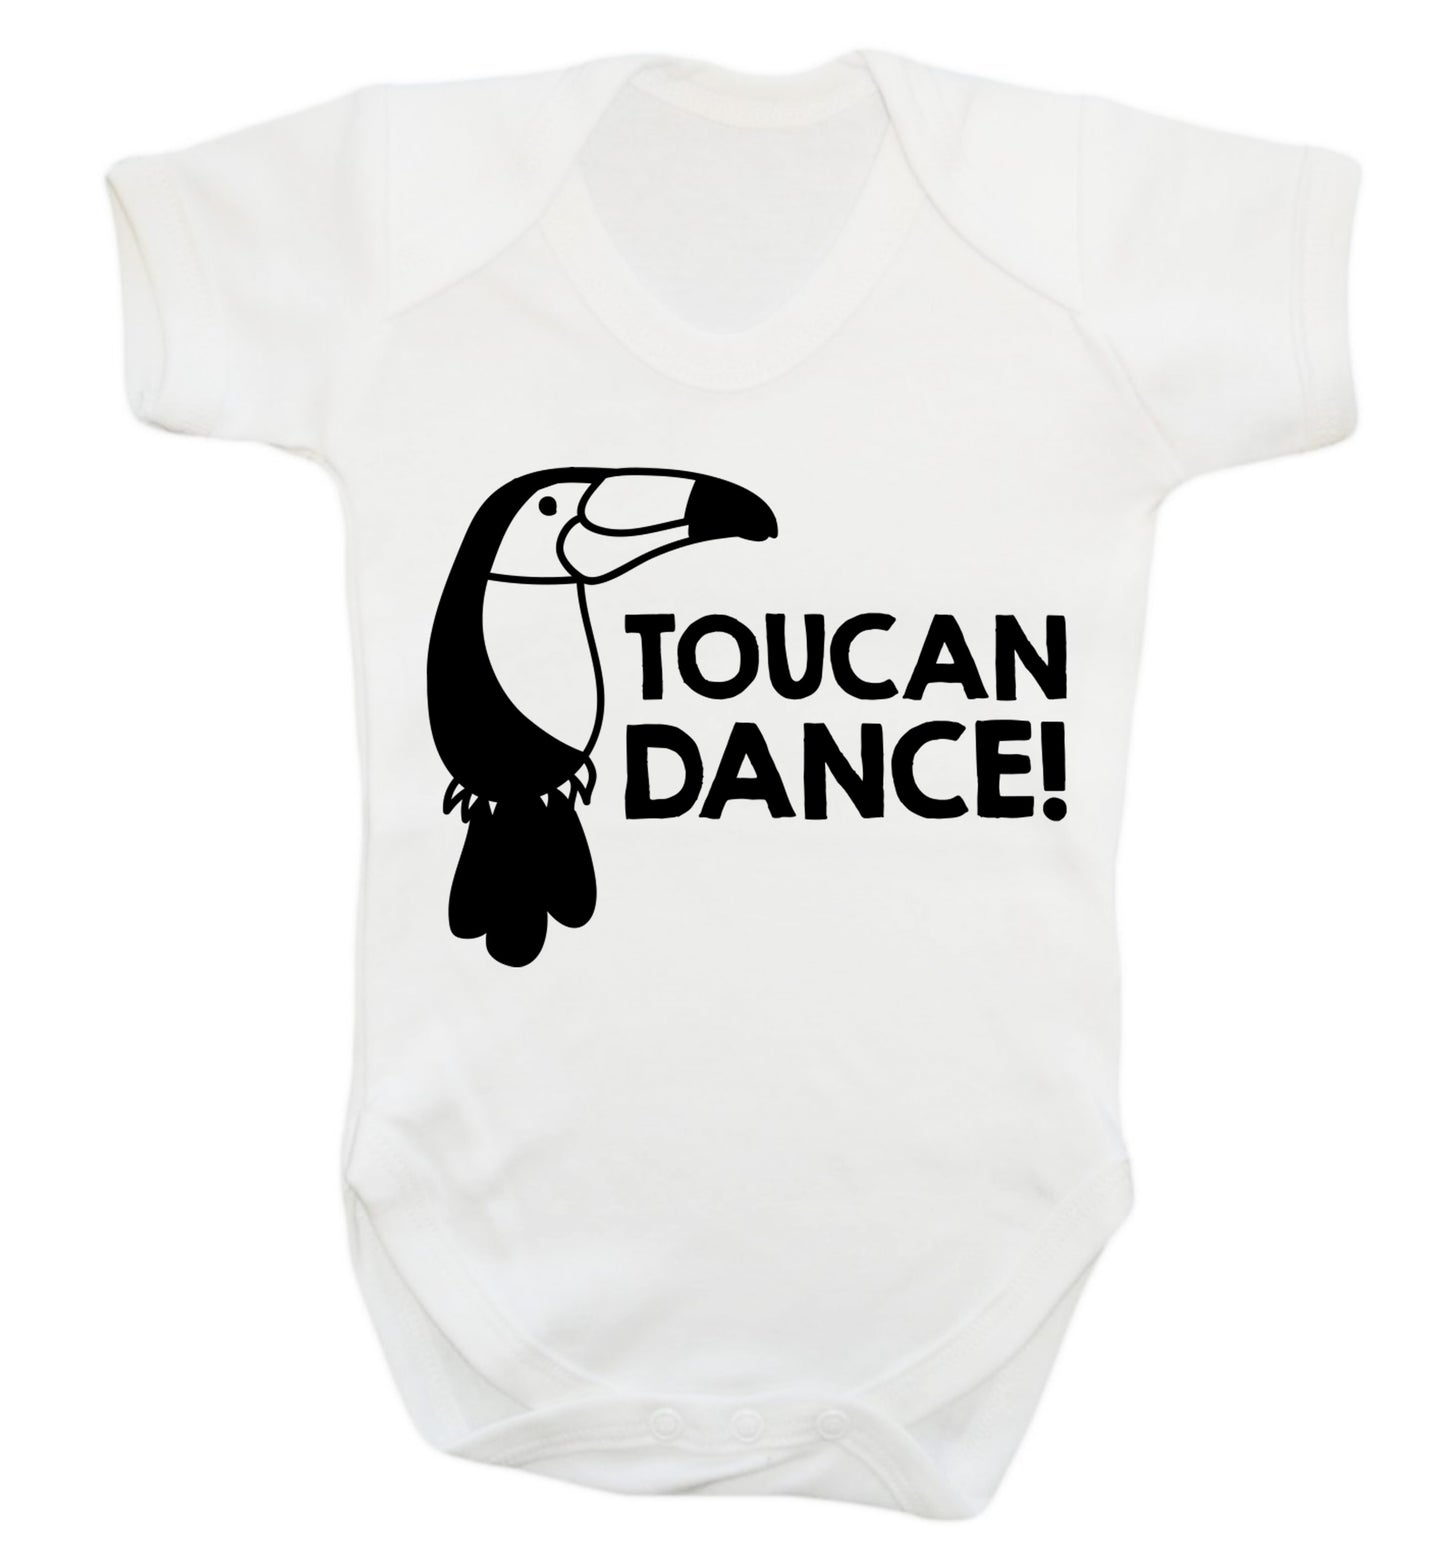 Toucan dance Baby Vest white 18-24 months